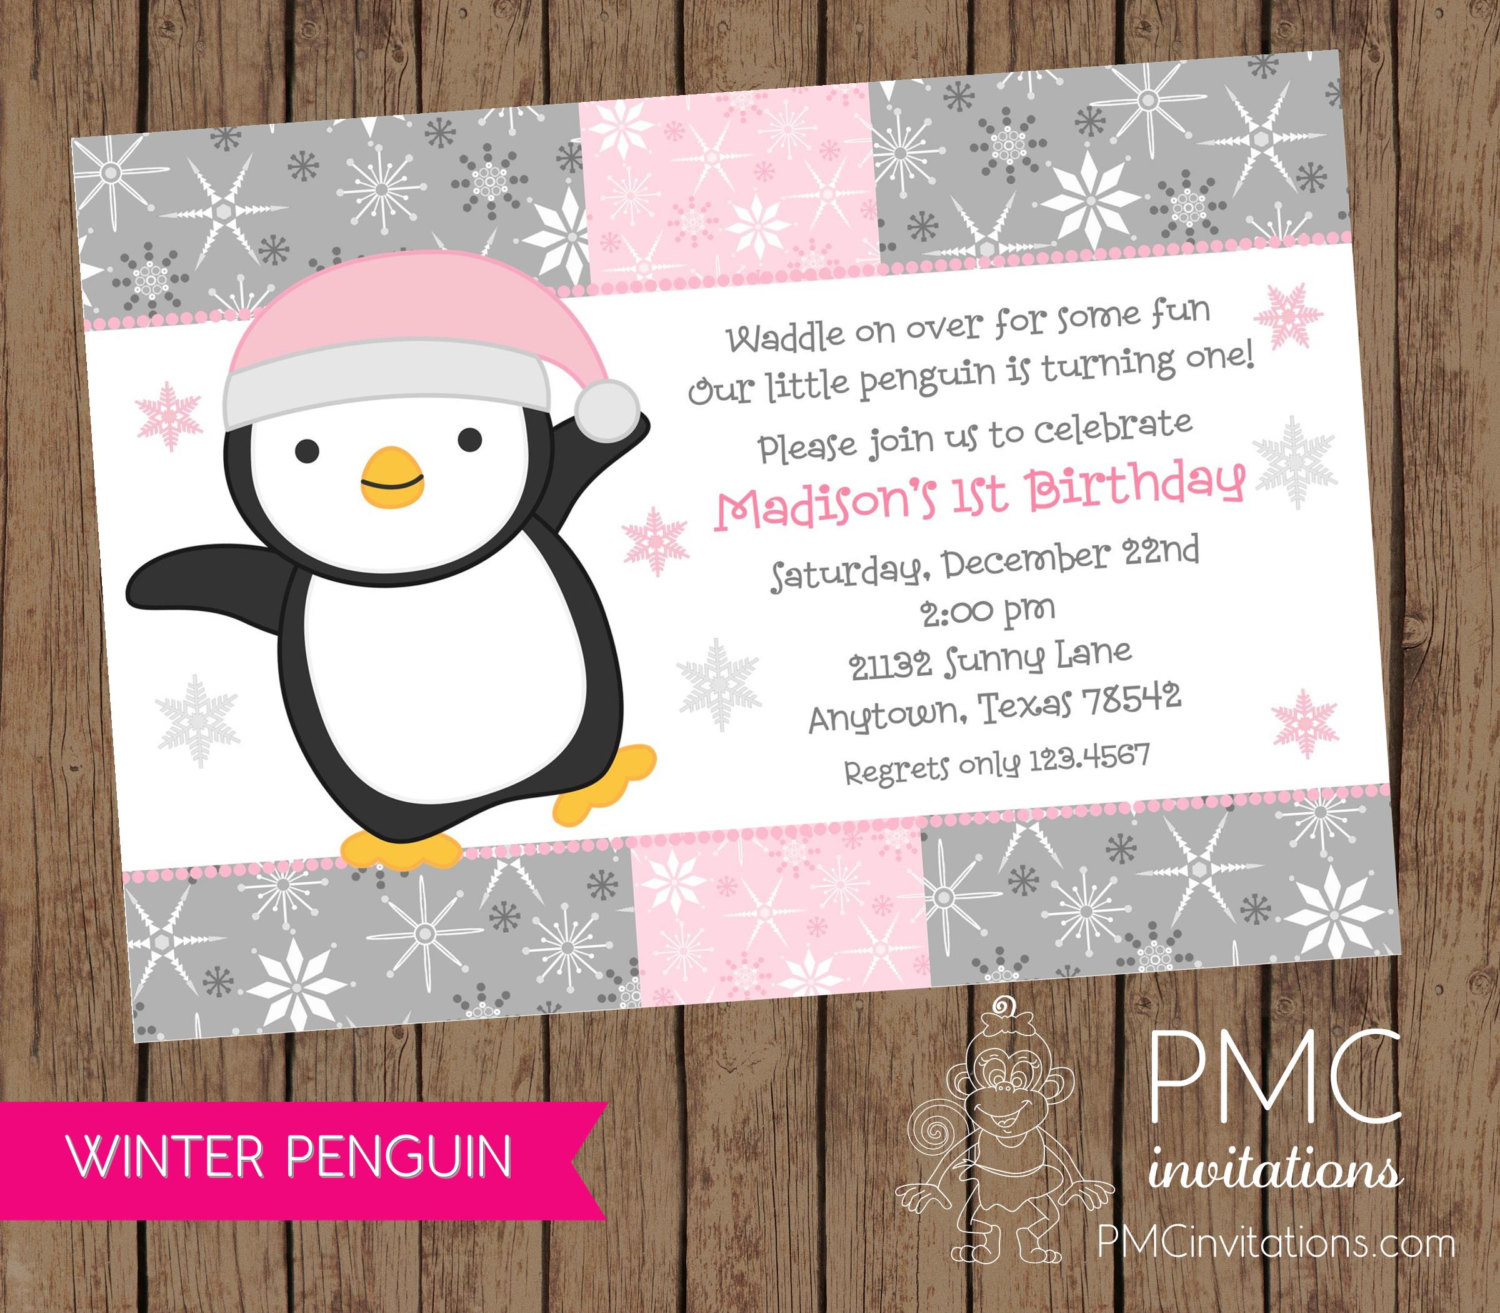 Penguin Birthday Invitations
 Winter Penguin Birthday Invitation 1 00 each with envelope